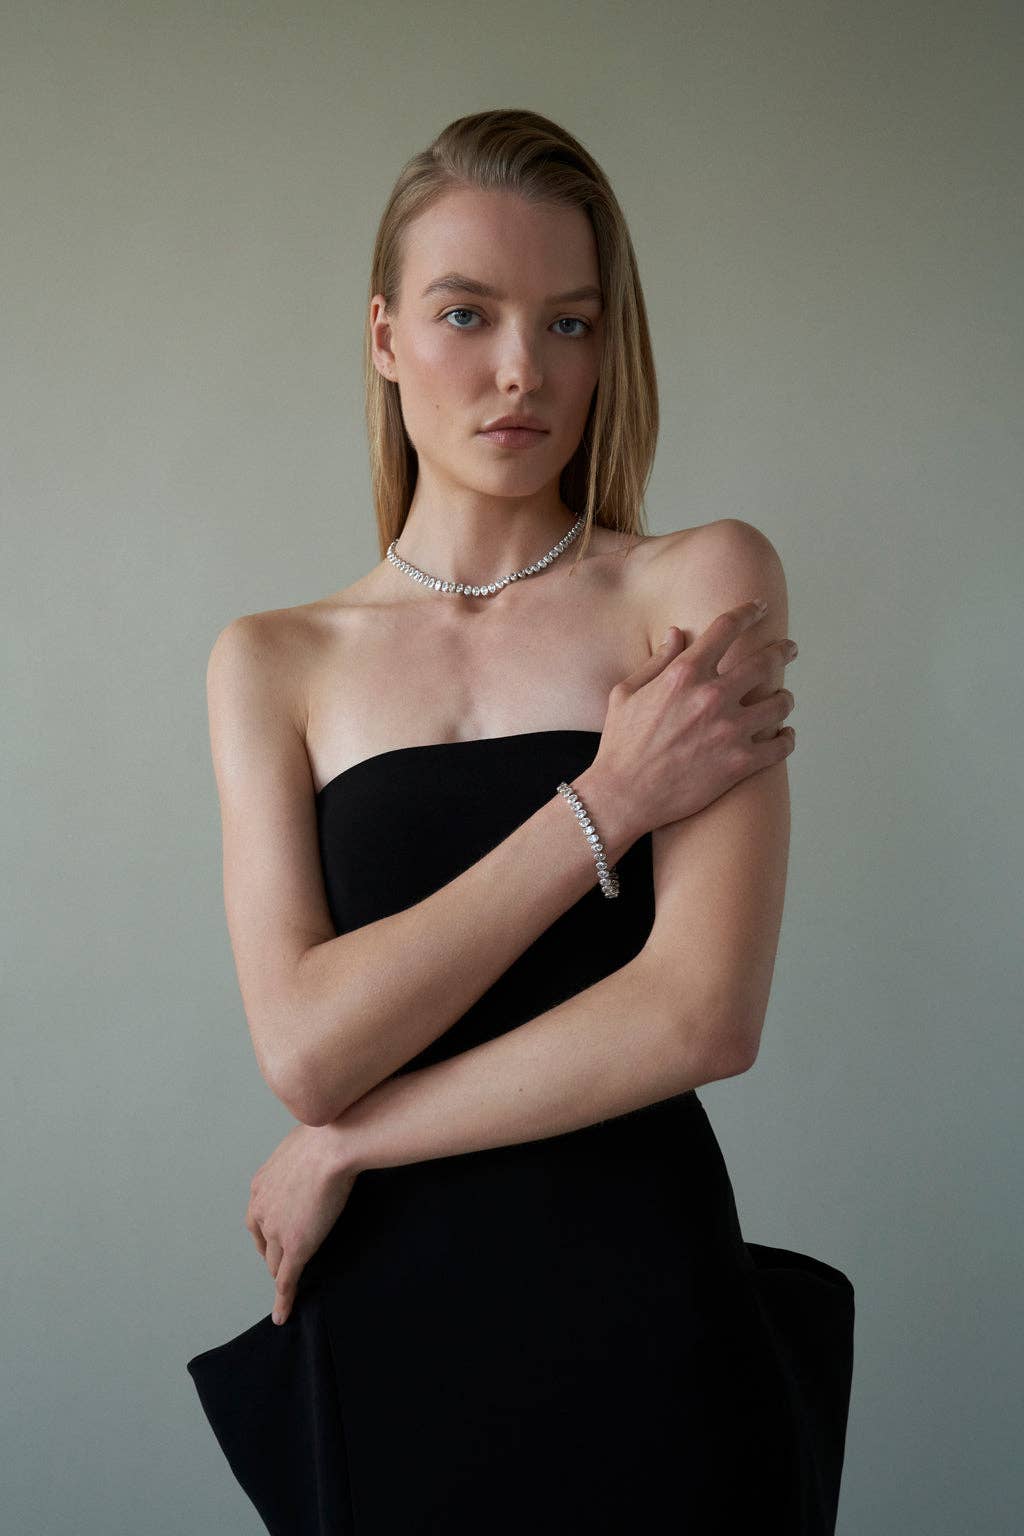 Tennis Bracelet | Roos | Lili Claspe